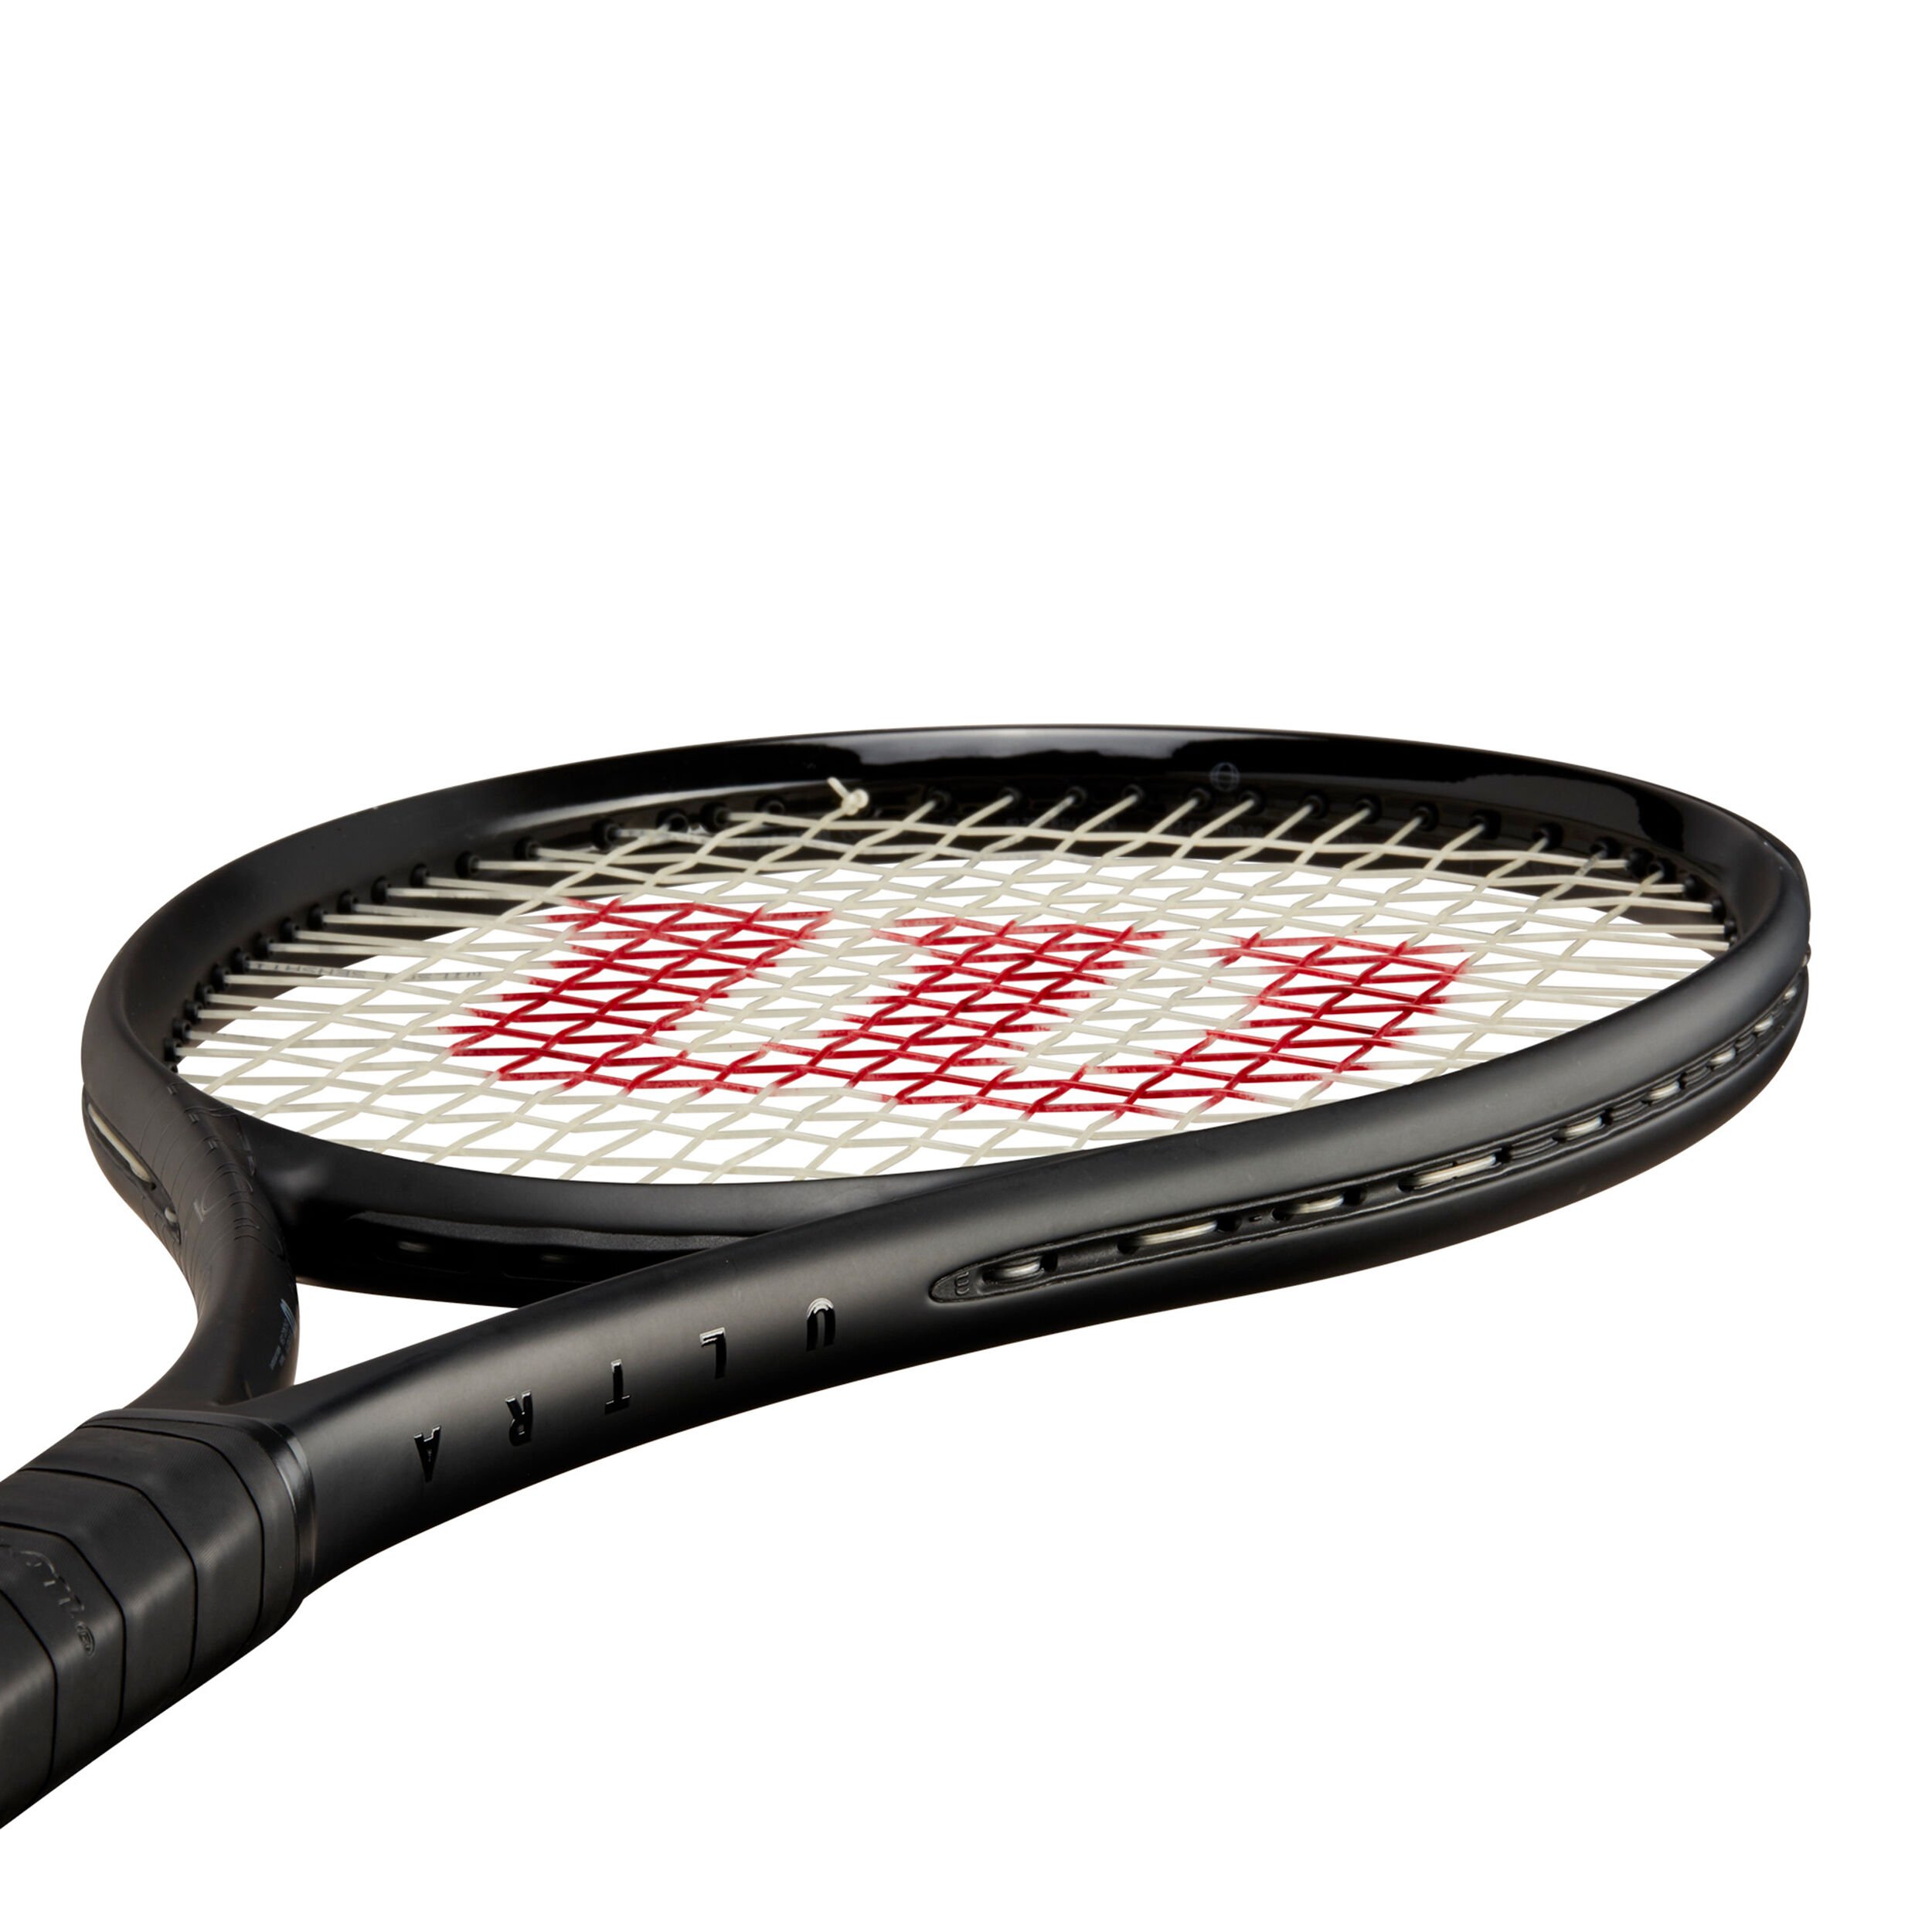 Buy Wilson Ultra 100 V4.0 Noir online | Tennis Point COM